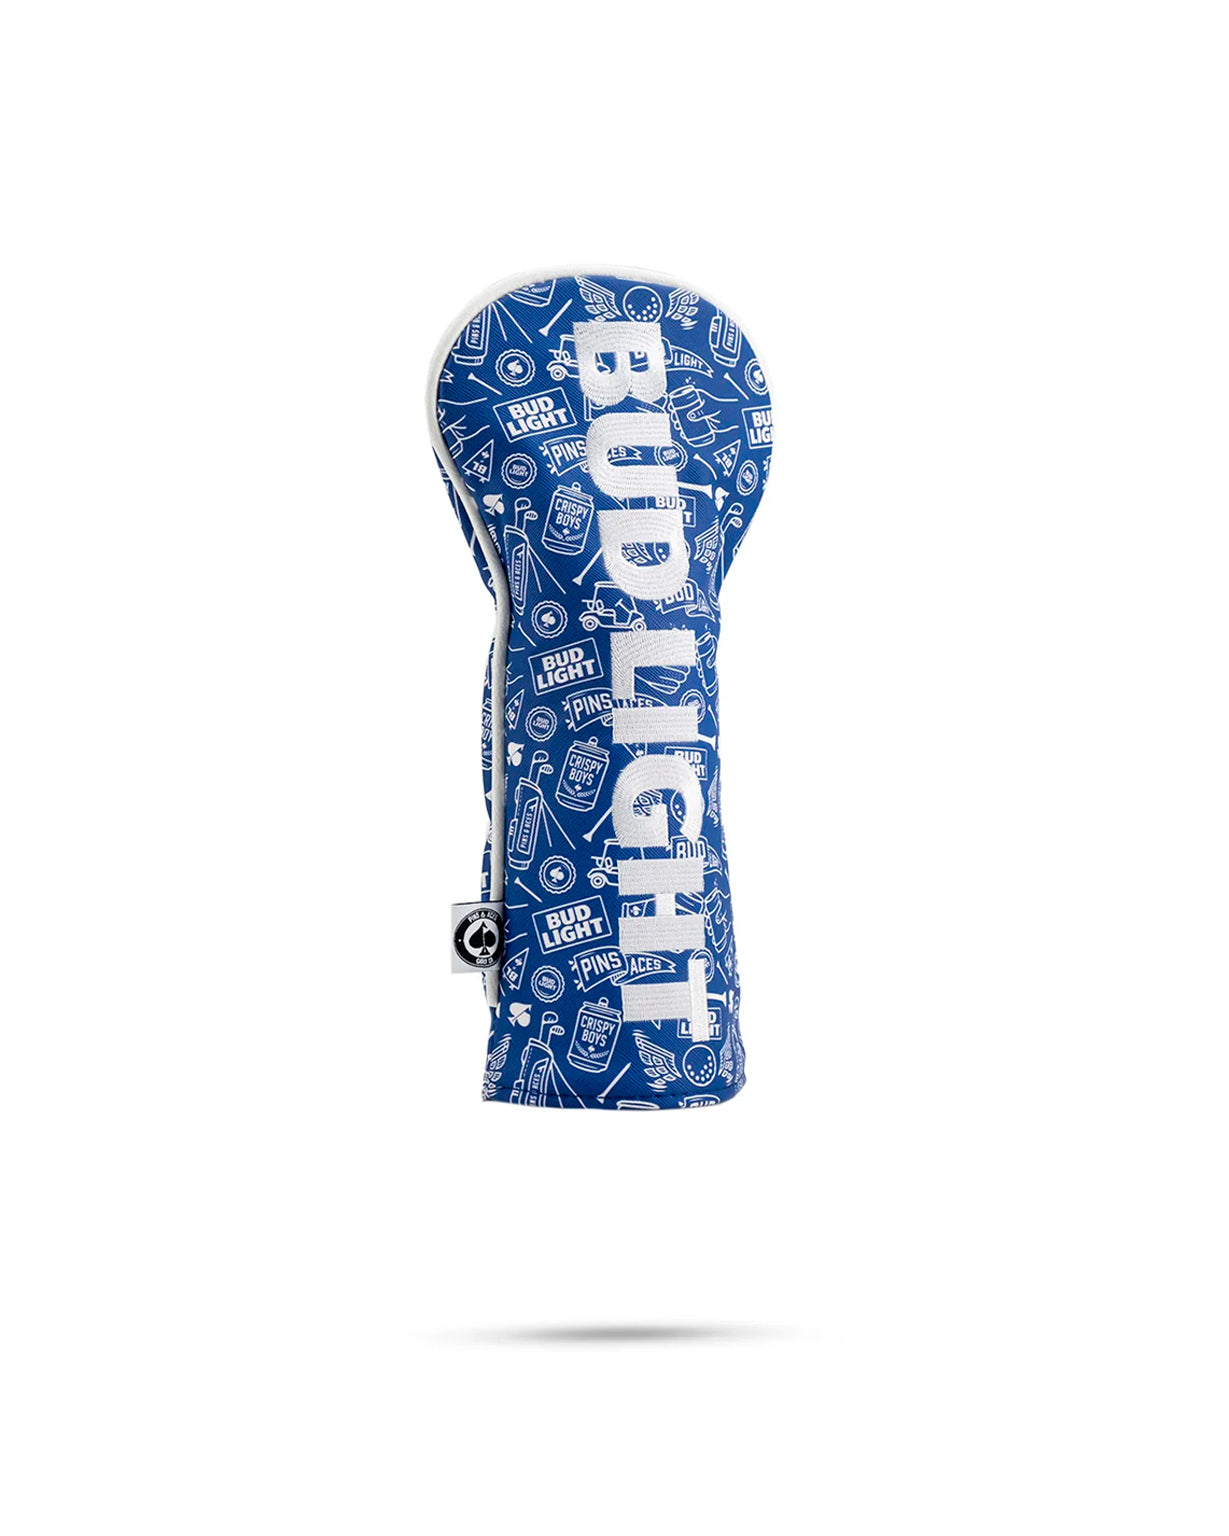 Bud Light Doodle - Hybrid Cover